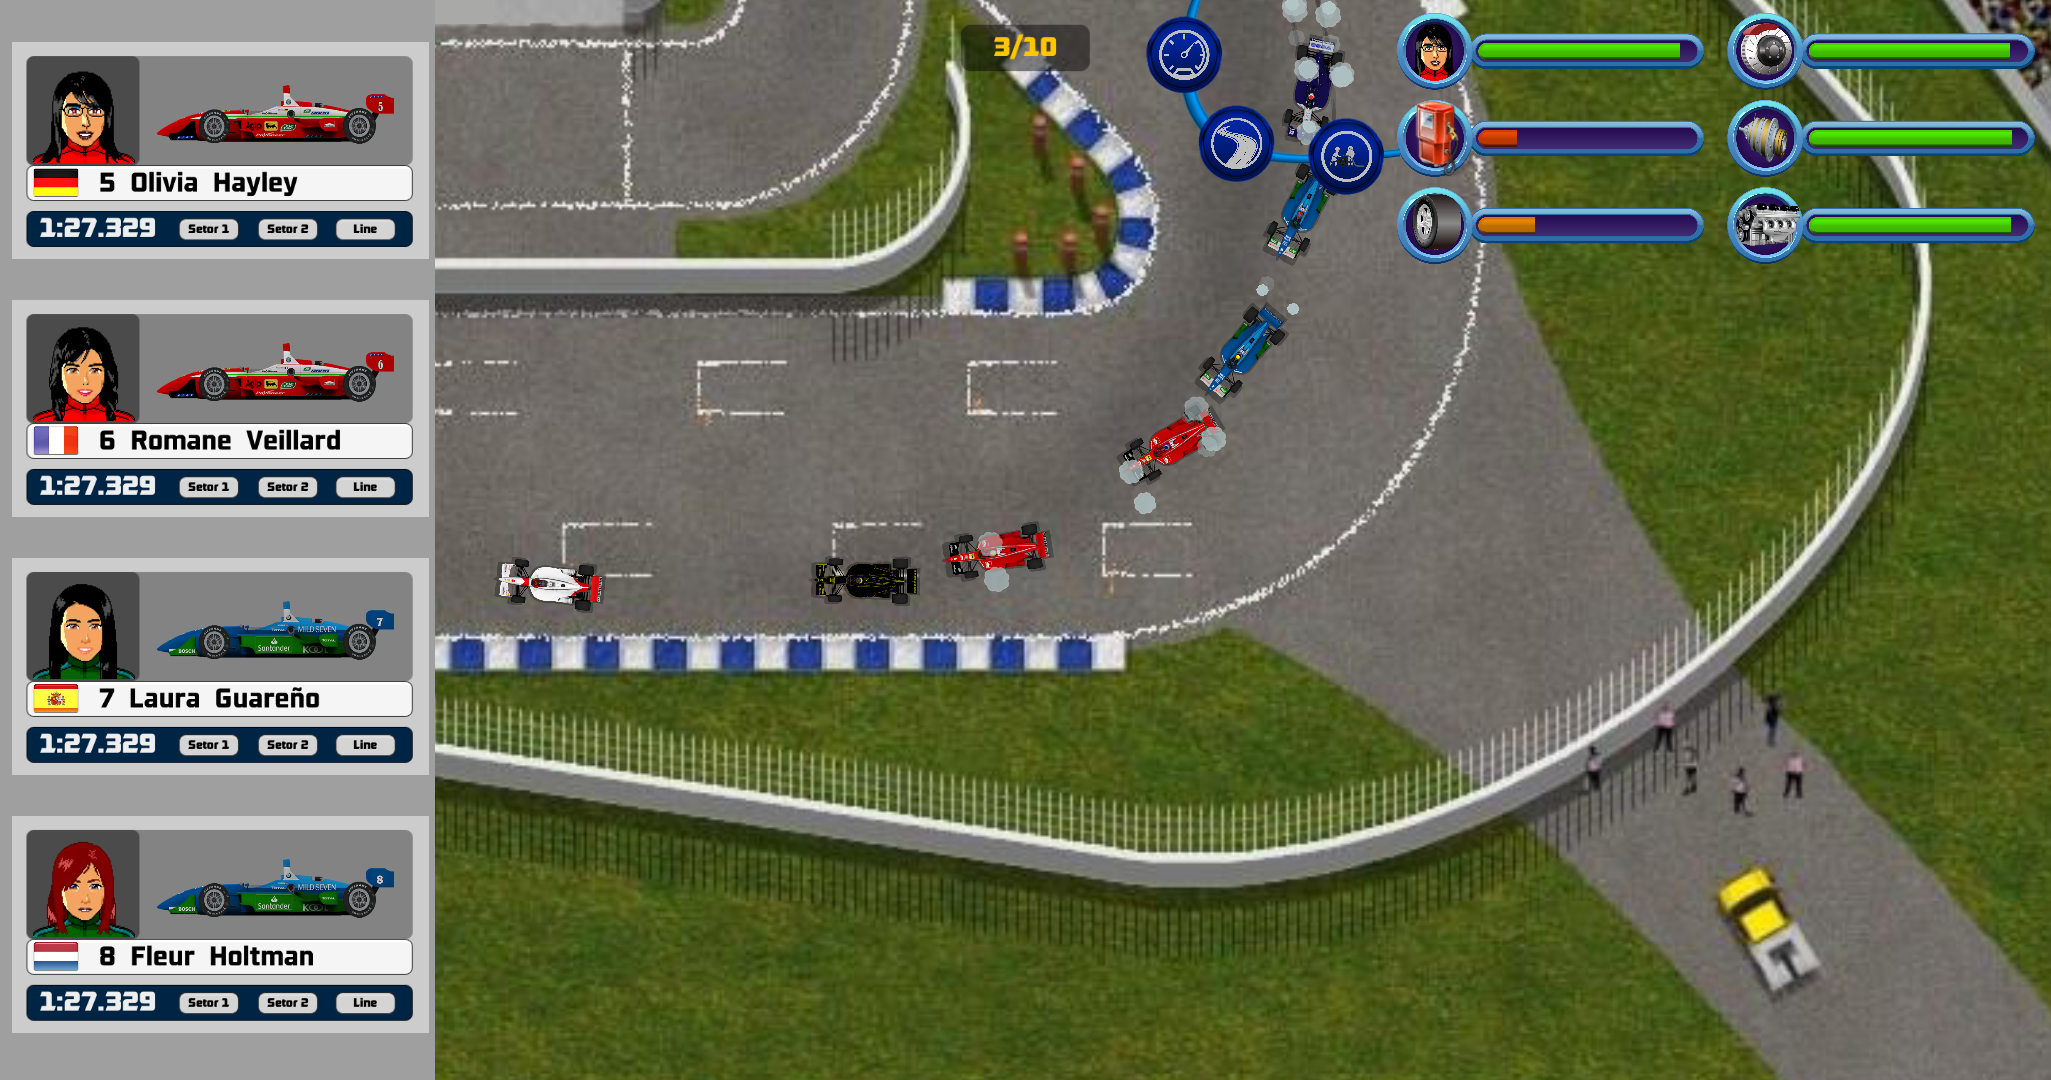 Screenshot 1 of Formel WDC 2019 